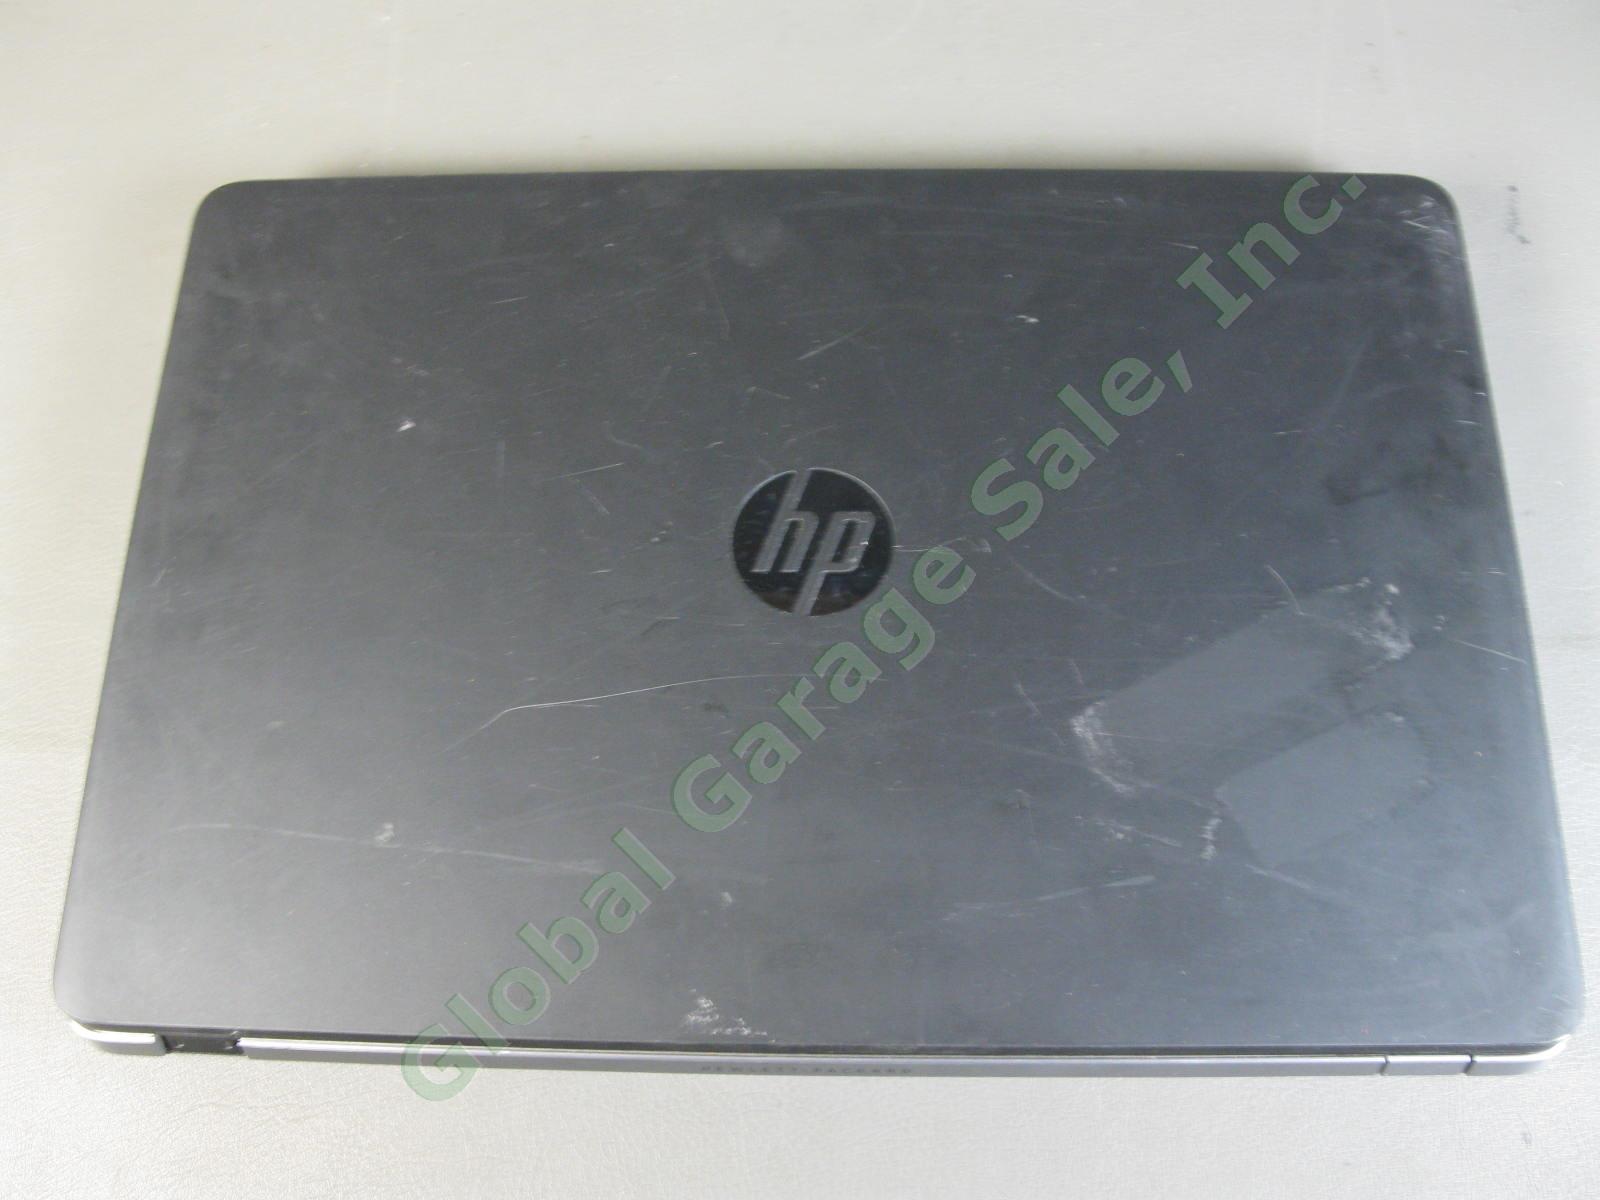 HP ProBook 450 G1 Laptop Computer i5-4200M 4GB 500GB Windows 10 WIFI DVD Webcam 6